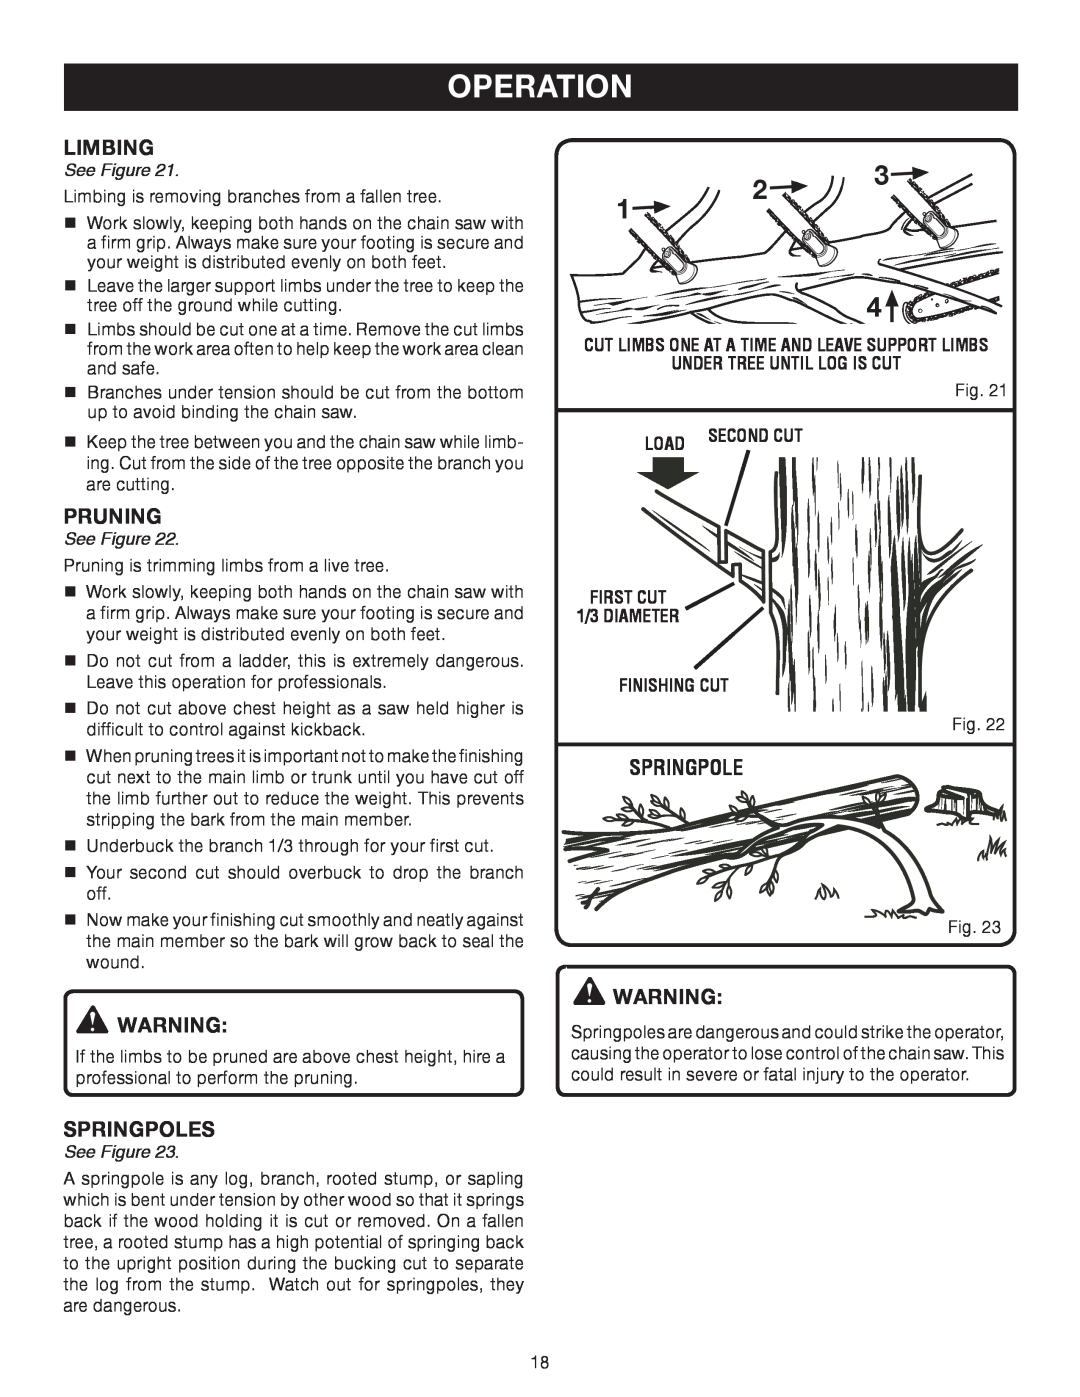 Ryobi P540B manual Limbing, Pruning, Springpoles, Operation, See Figure 